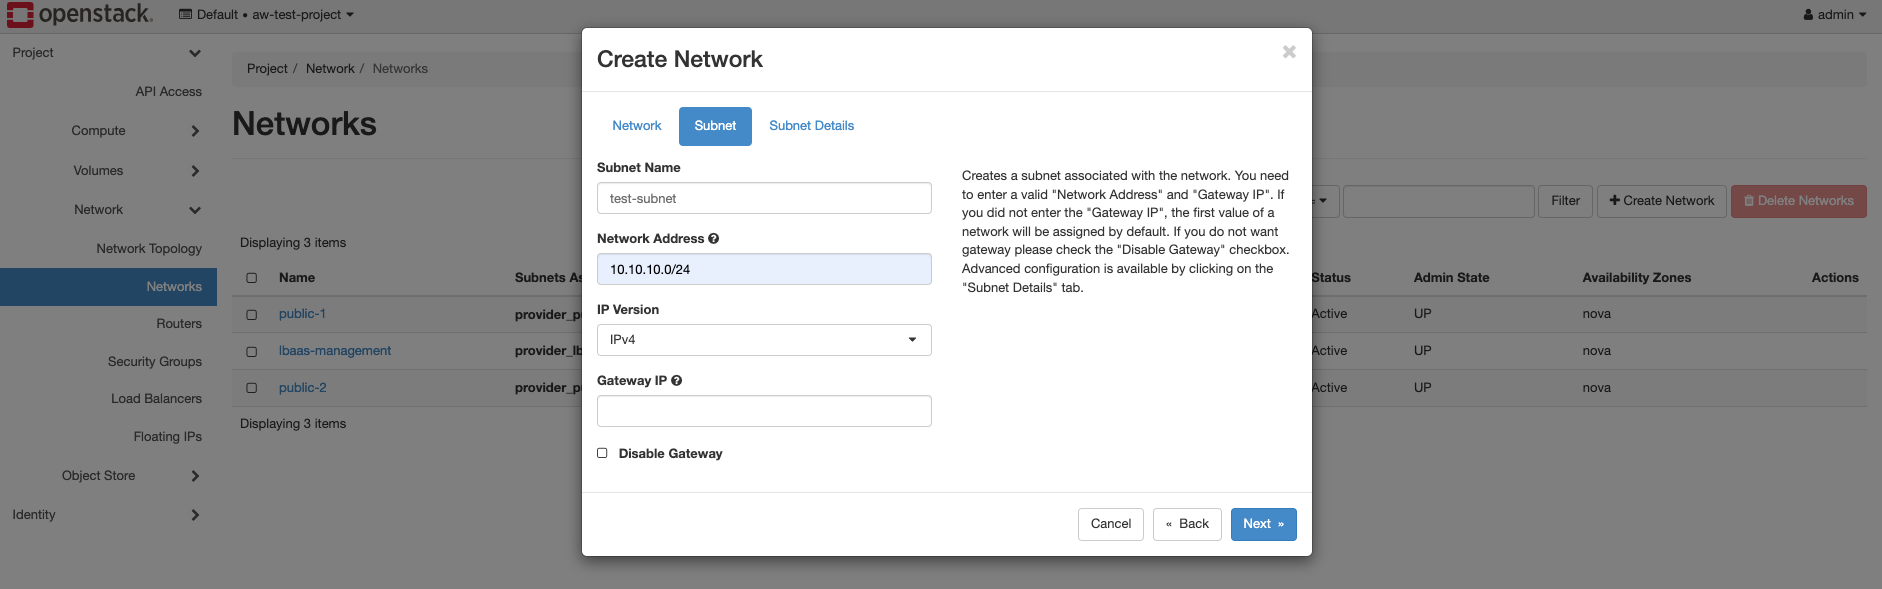 Openstack New Network define subnet